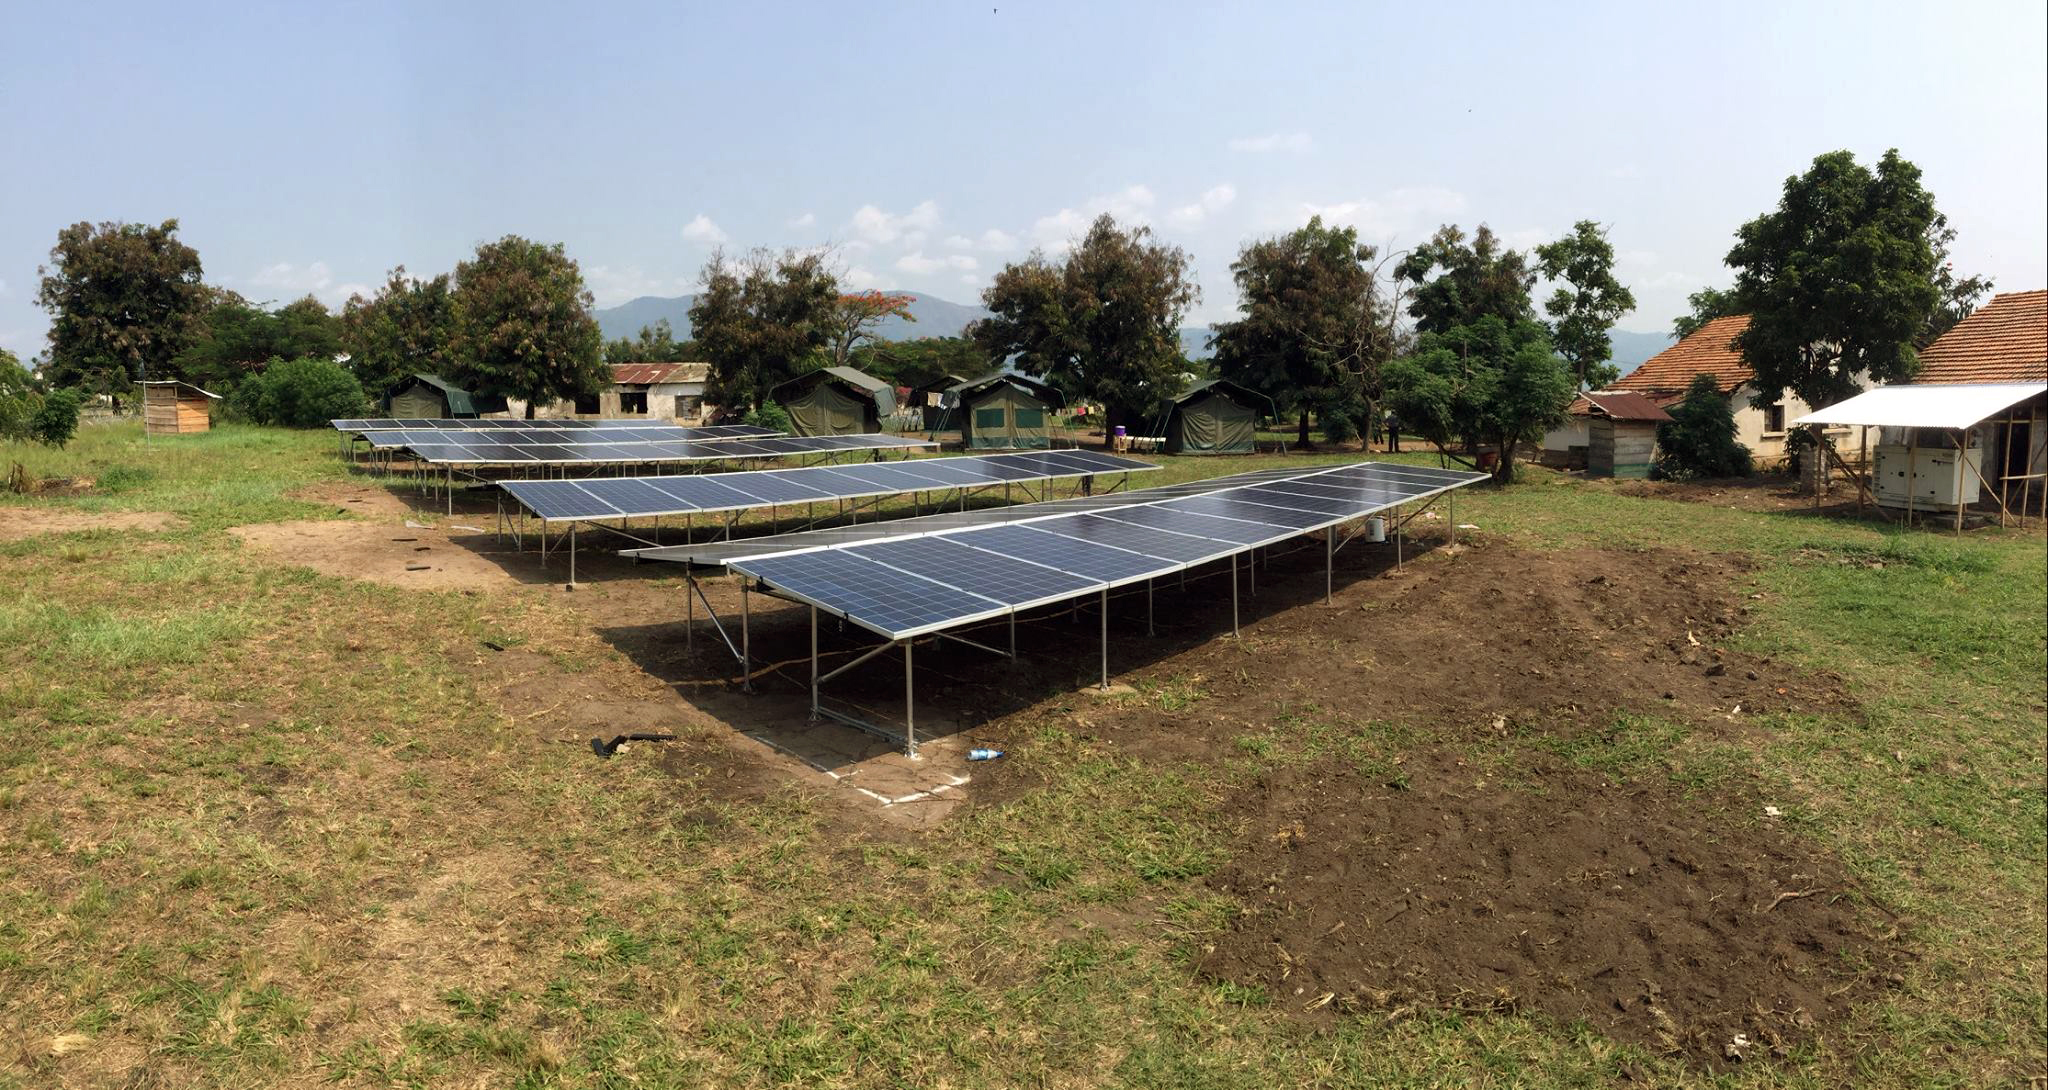 Solar photovoltaic array at Rwindi Ranger Station (Photo courtesy of Joe O'Connor)